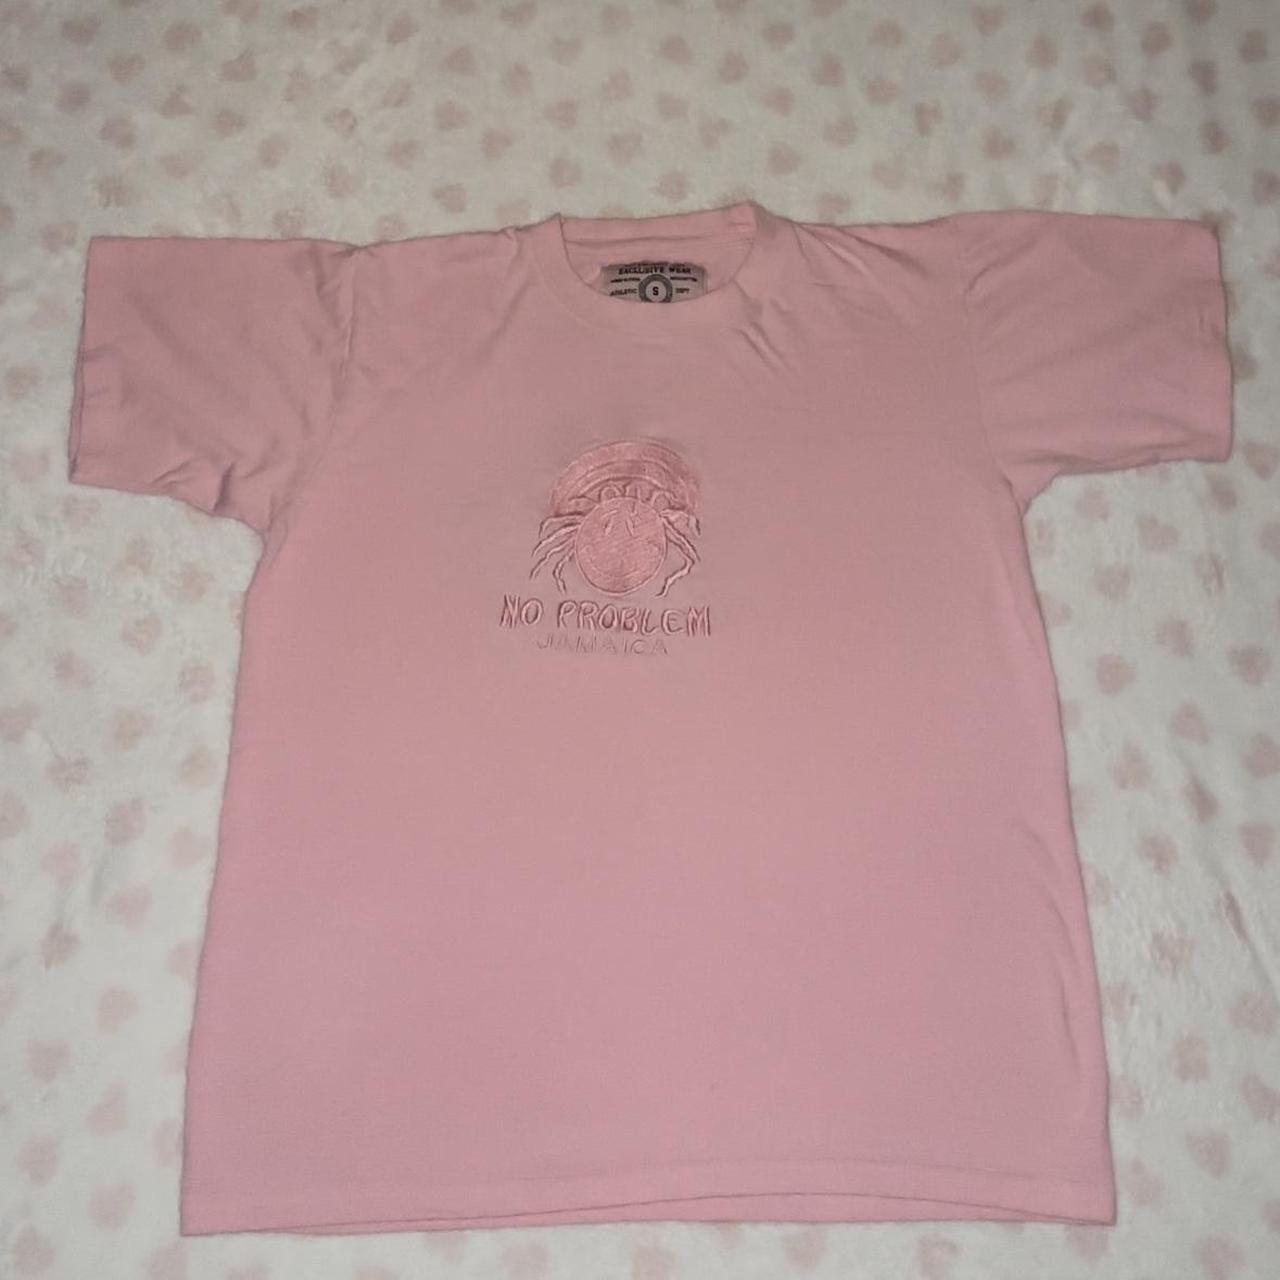 light pink “No Problem Jamaica” tee shirt - Depop